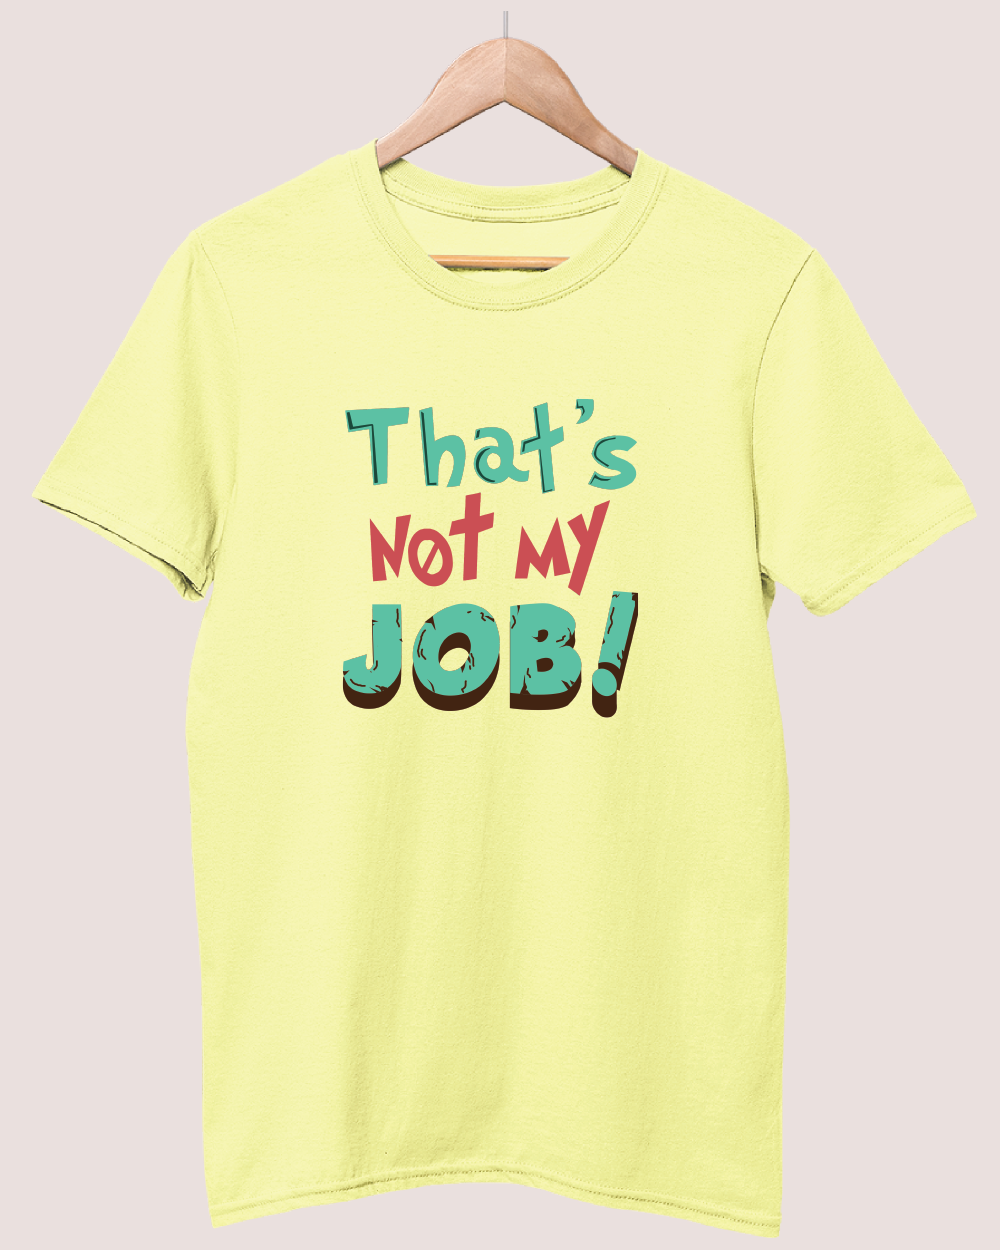 Thats not my job T-shirt